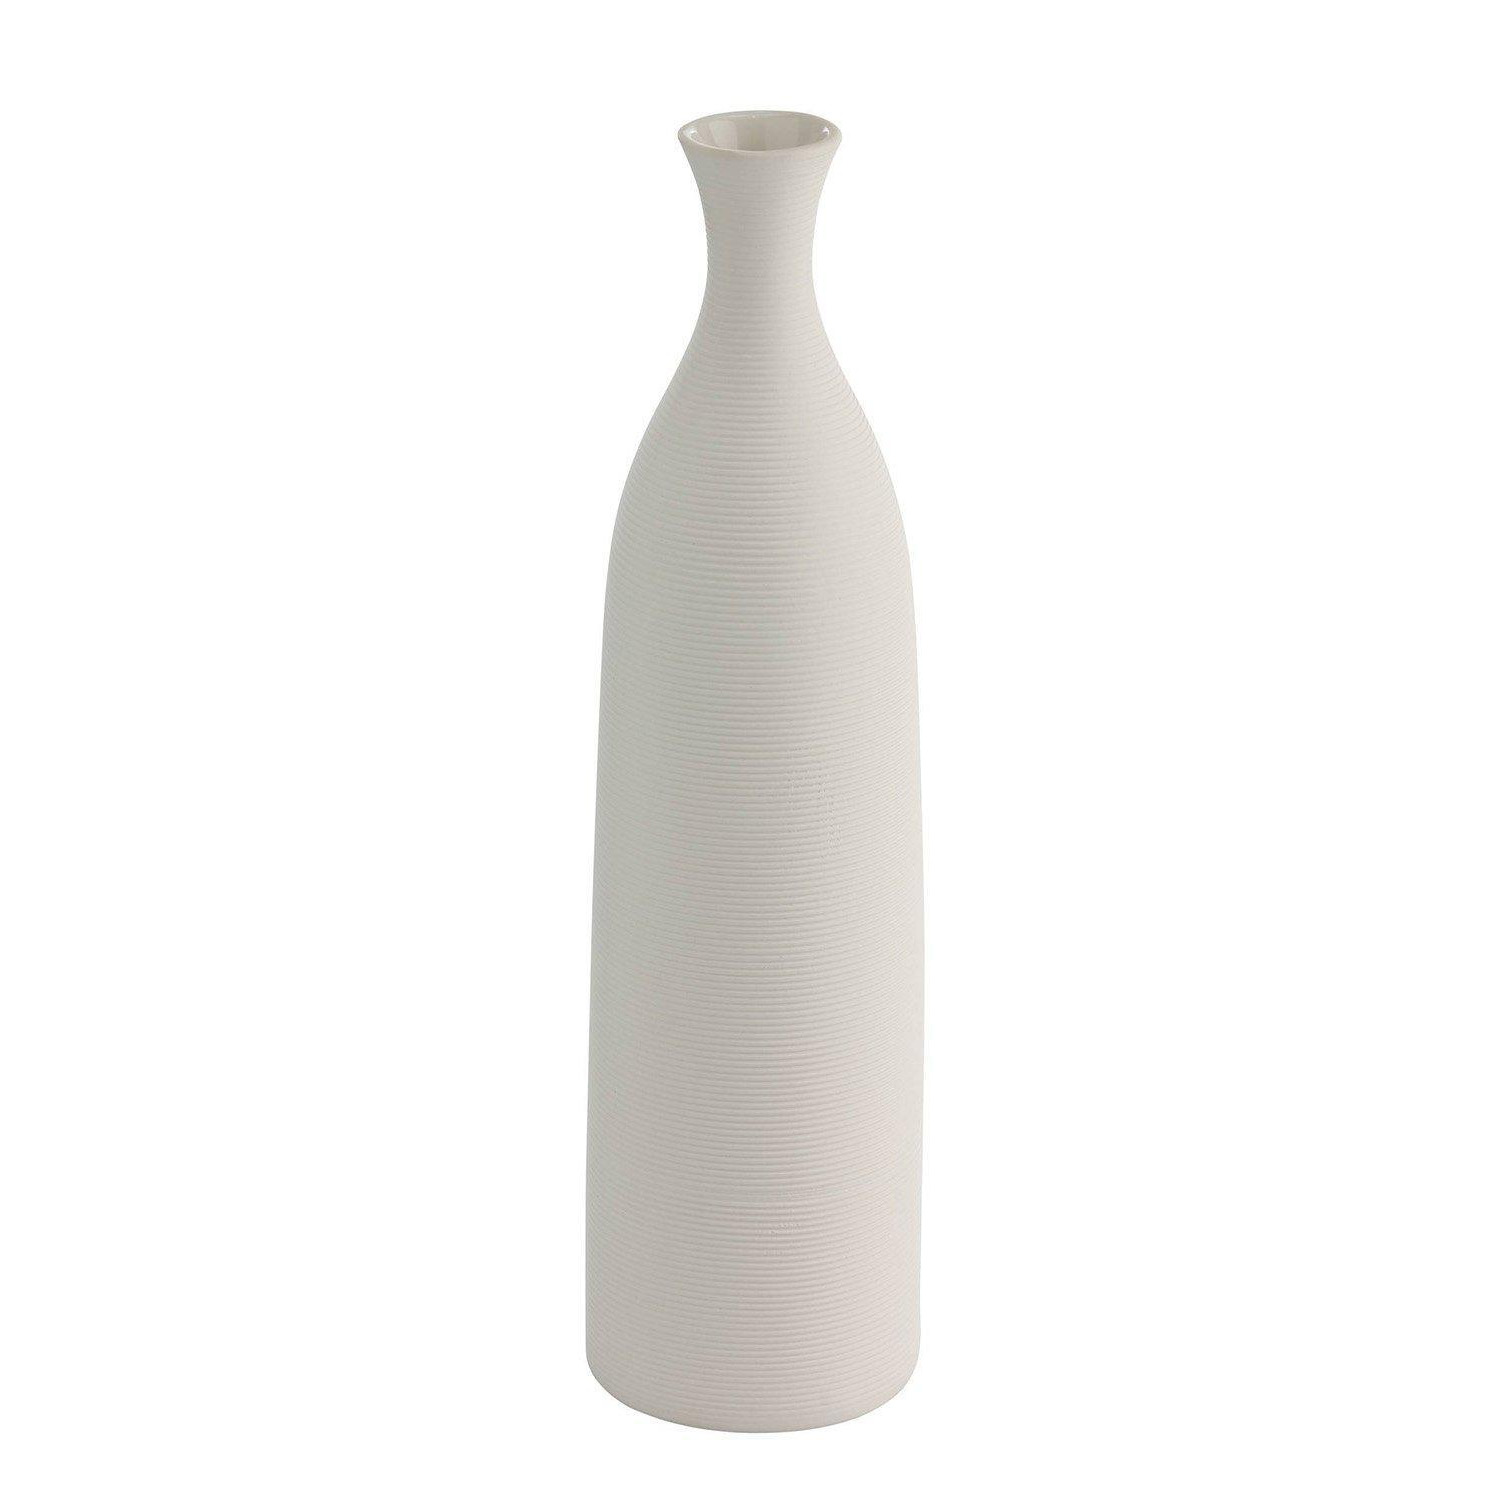 Mitane White Textured Ceramic Vase - image 1